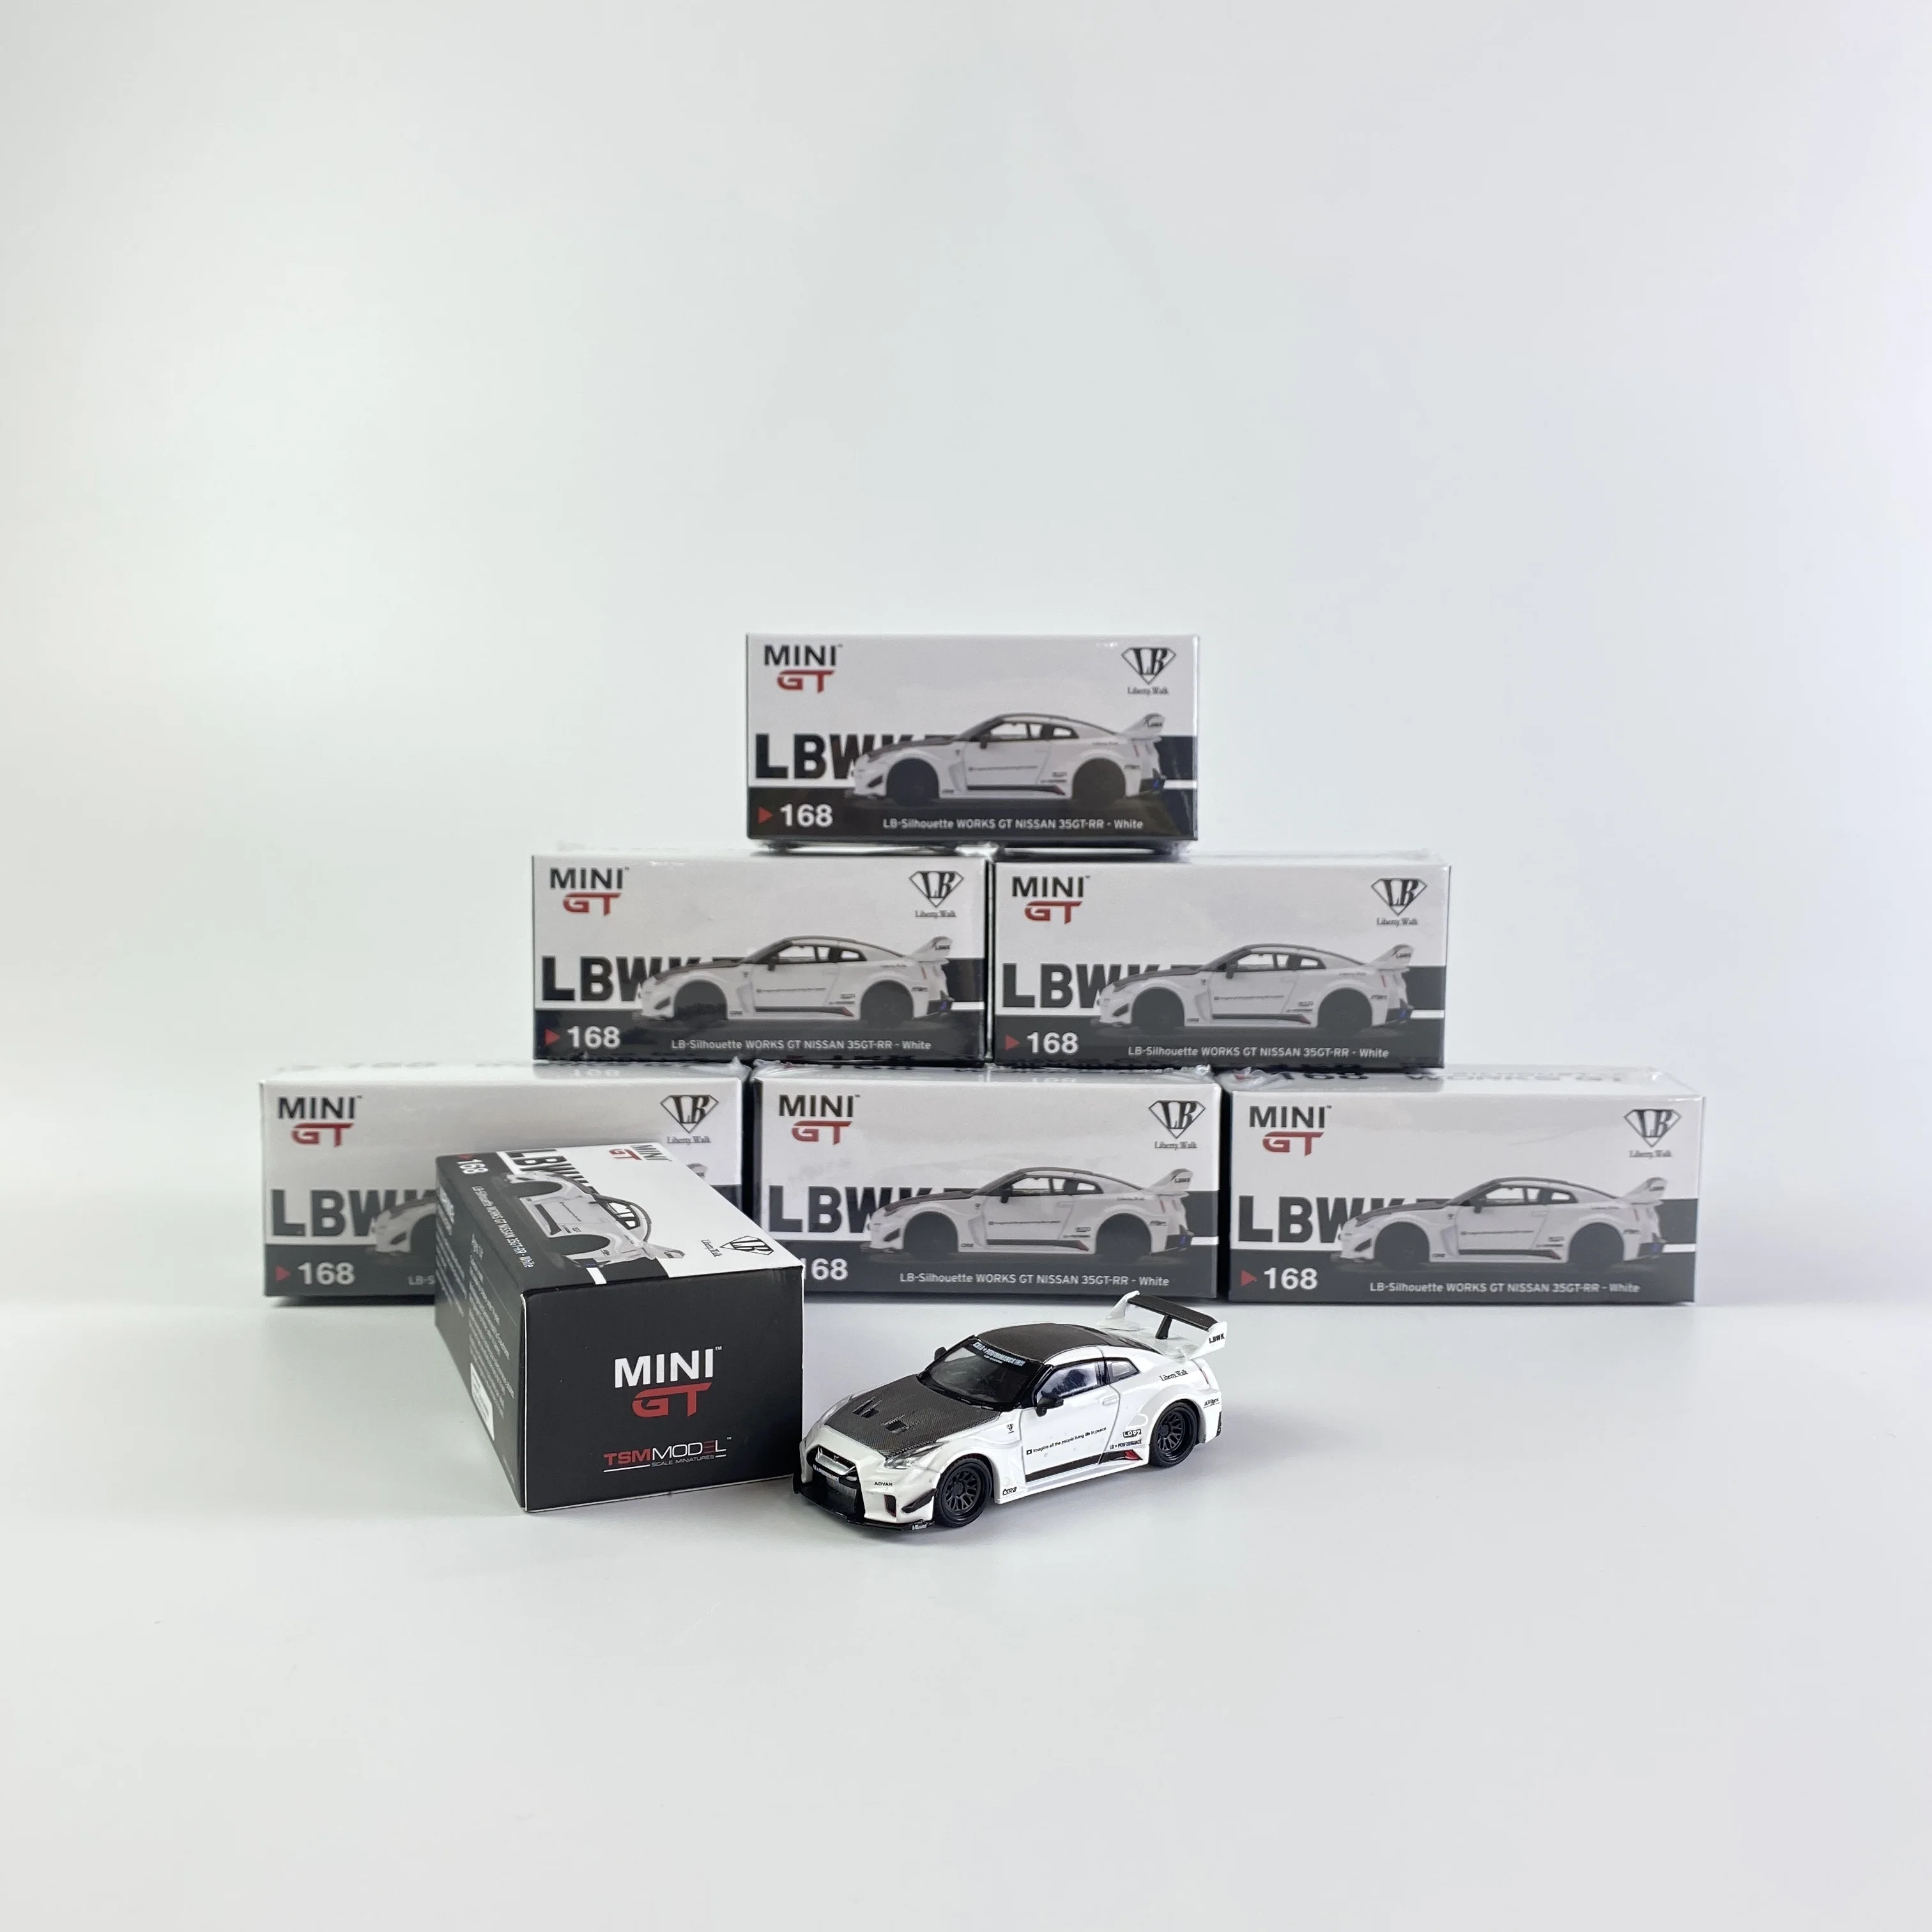 

MINI GT 1:64 LB-Silhouette WORKS GT NISSANs 35GT-RR Collection Metal Die-cast Simulation Model Cars Toys